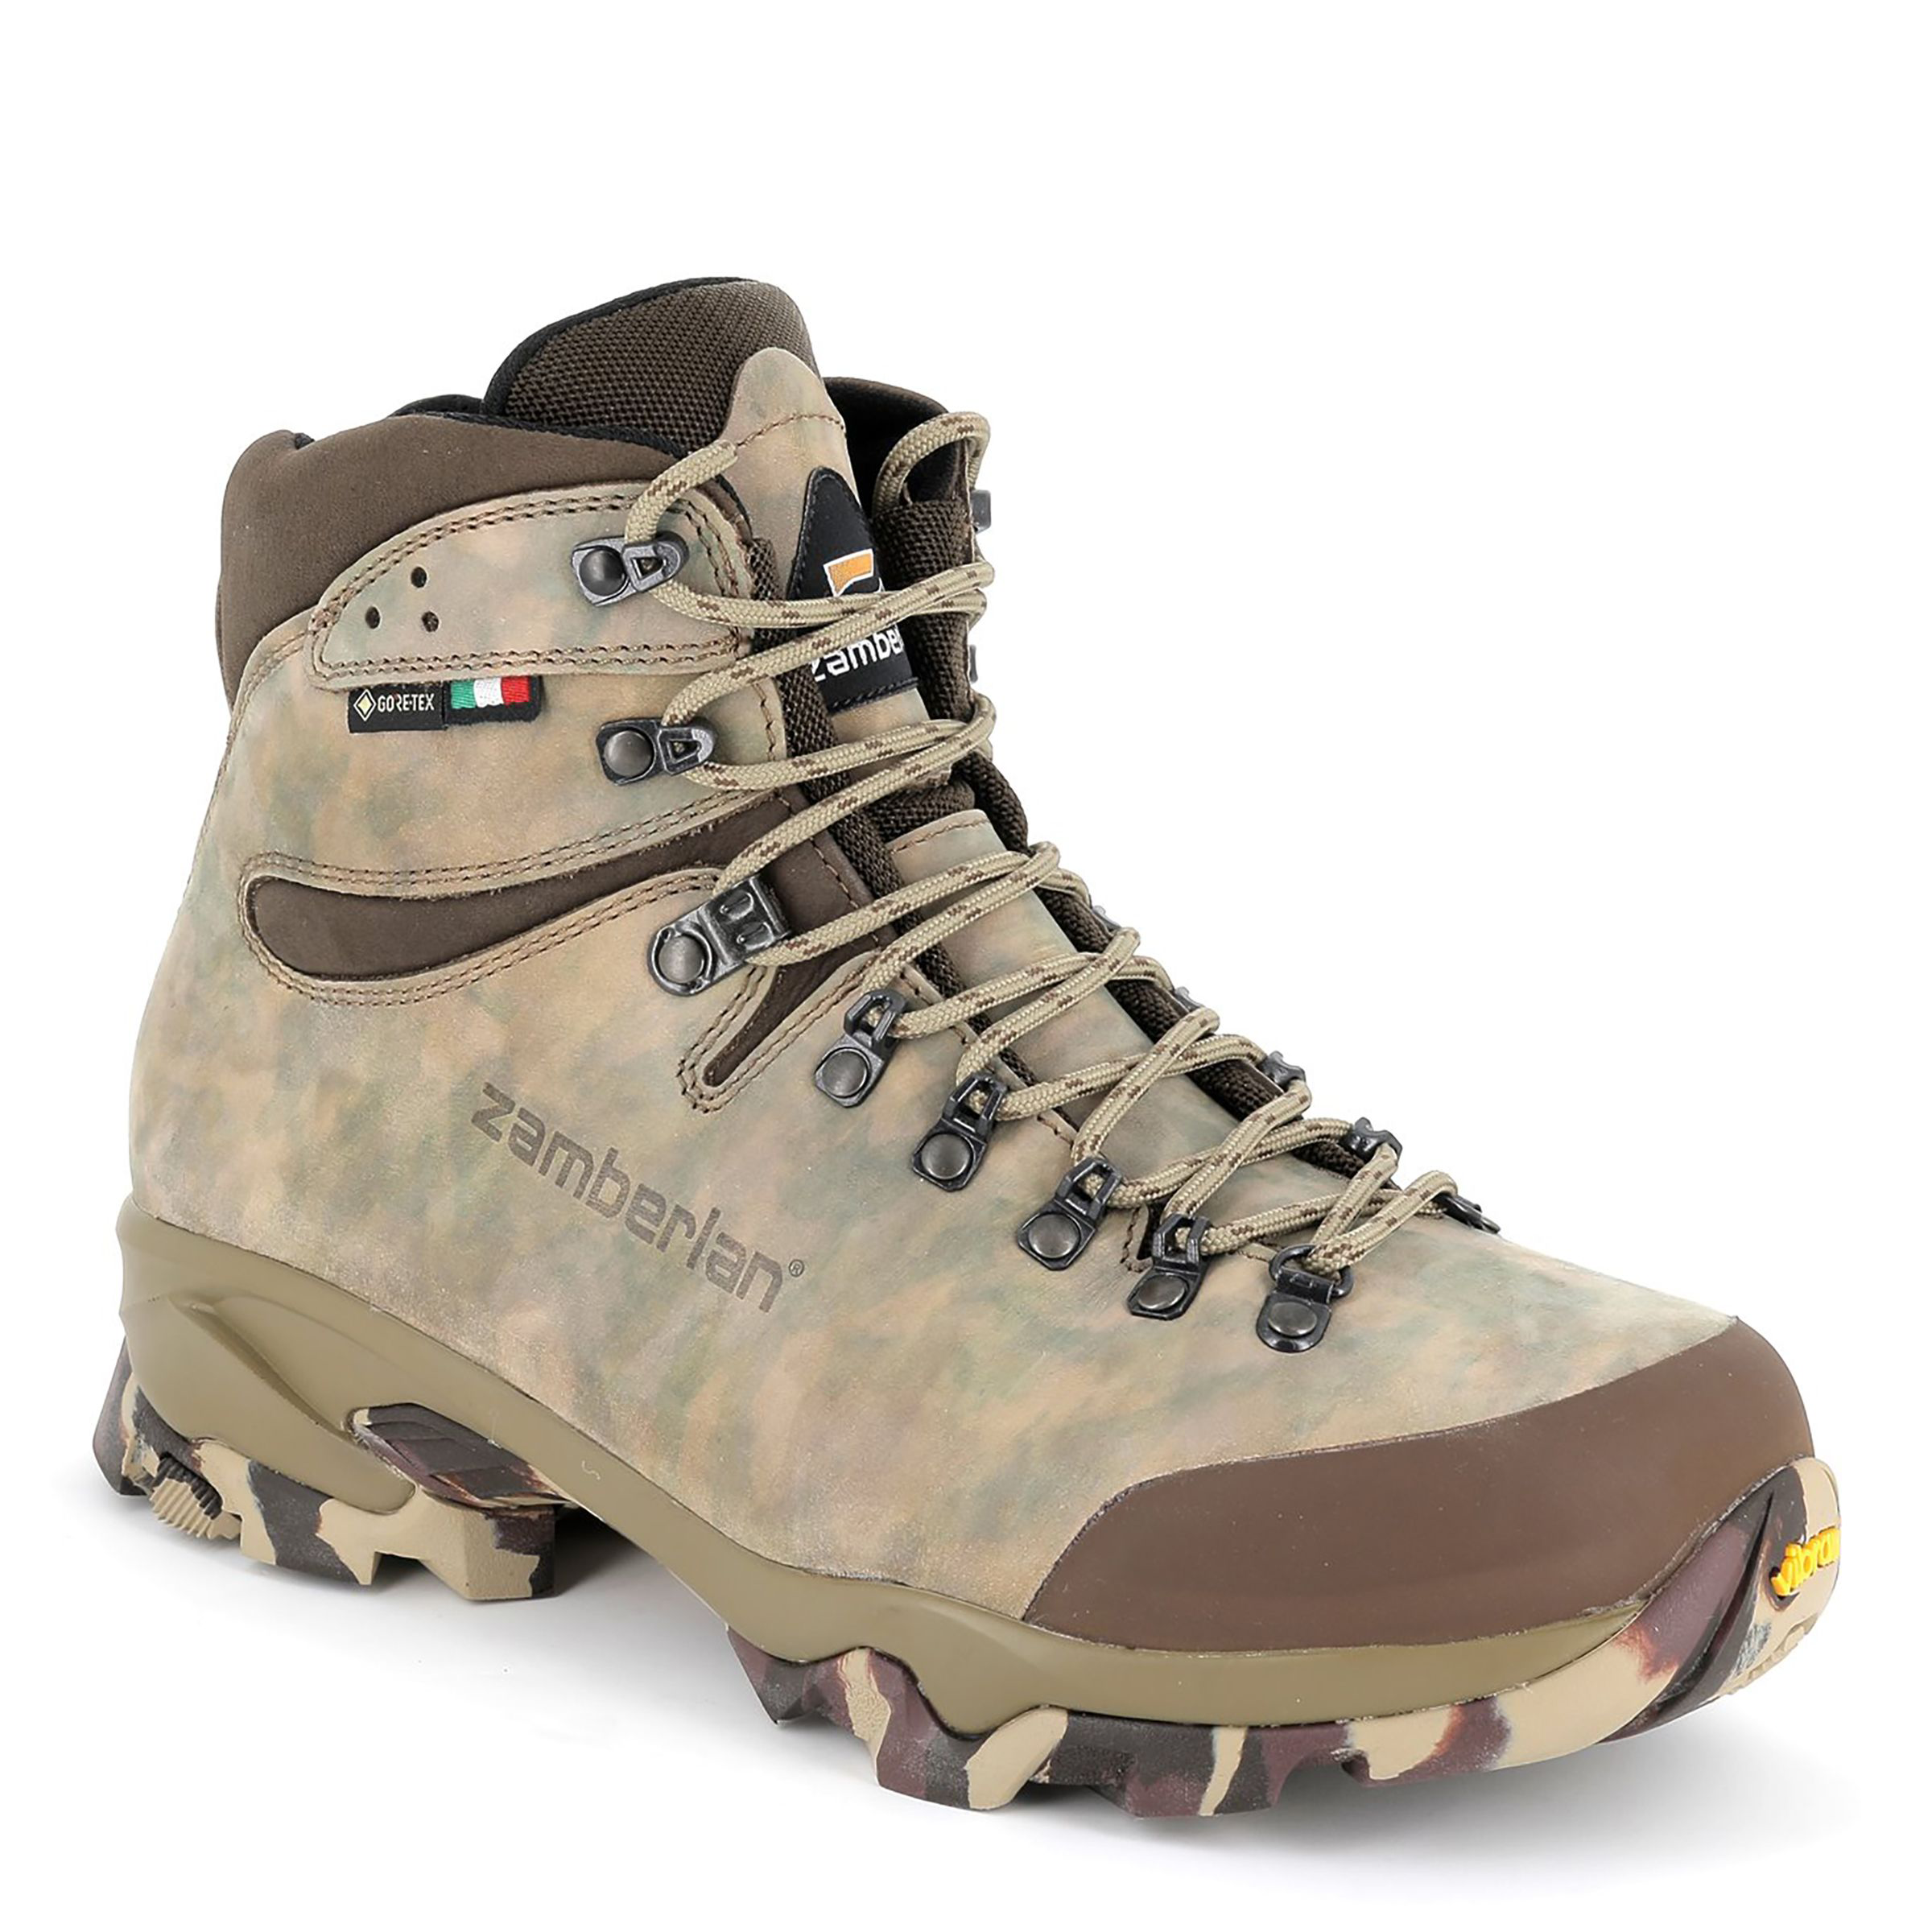 Zamberlan 1213 Leopard GTX RR GORE-TEX Hunting Boots for Men